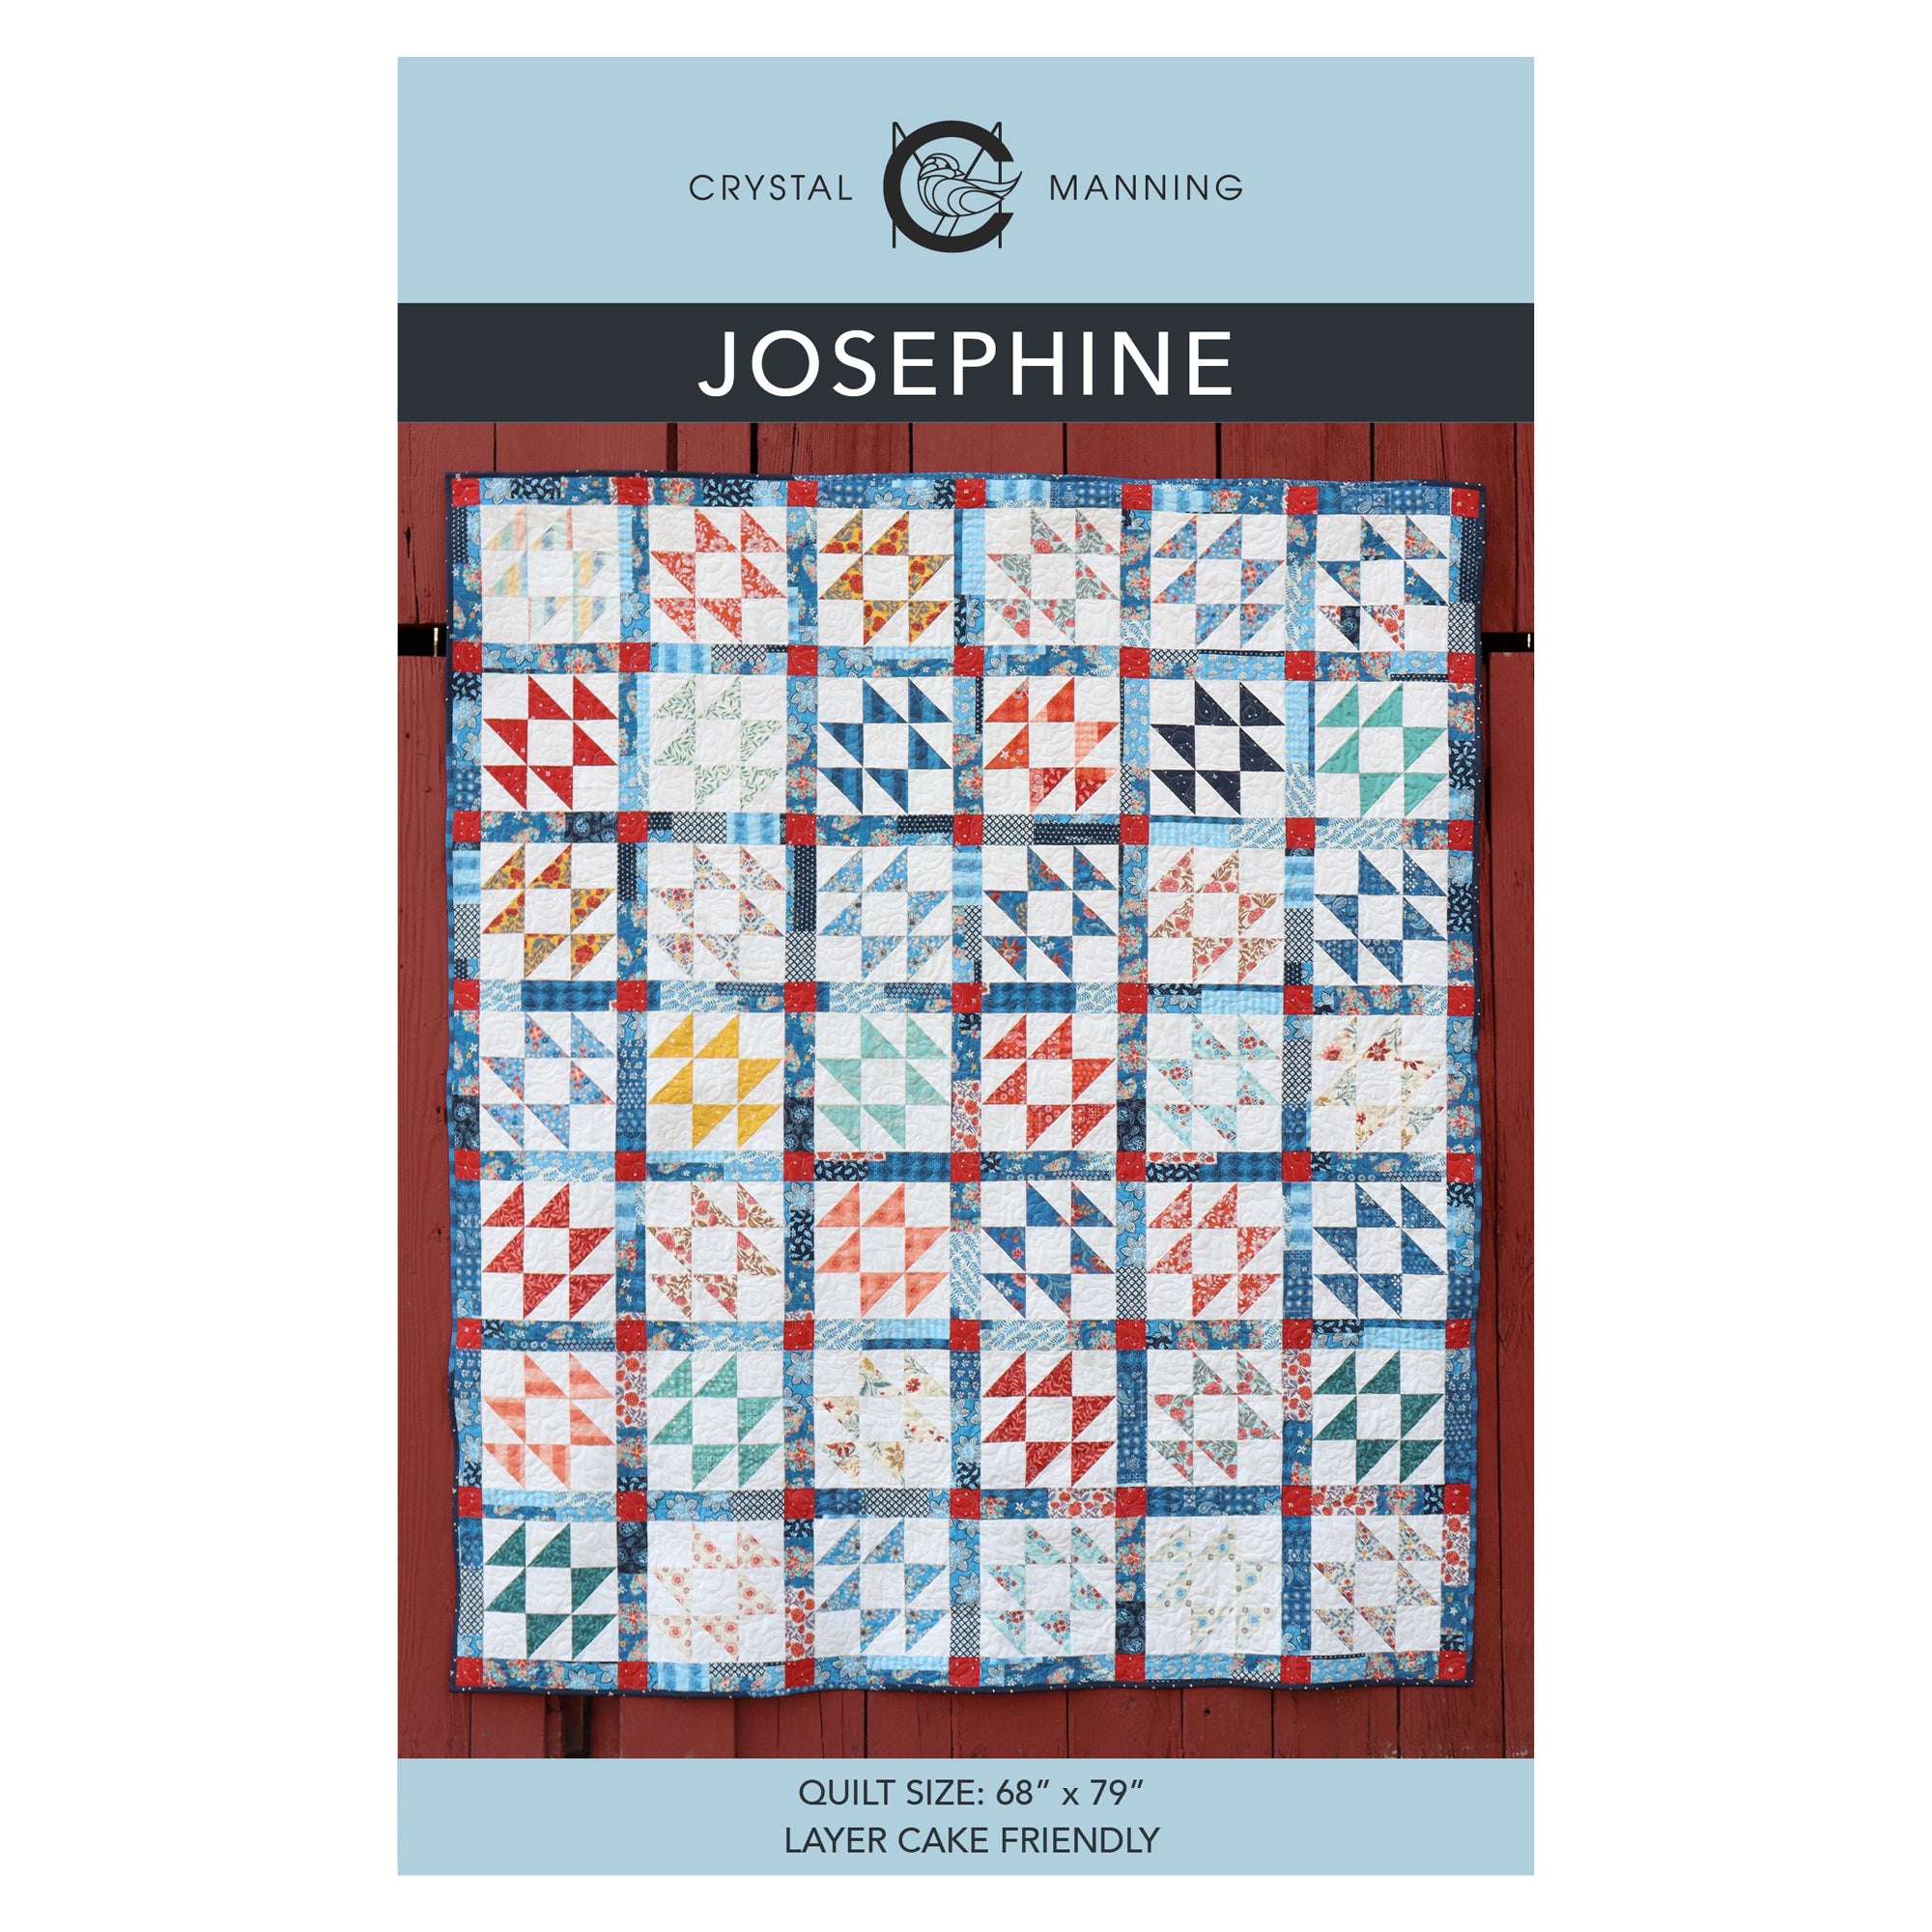 JOSEPHINE--Ladies' patterns